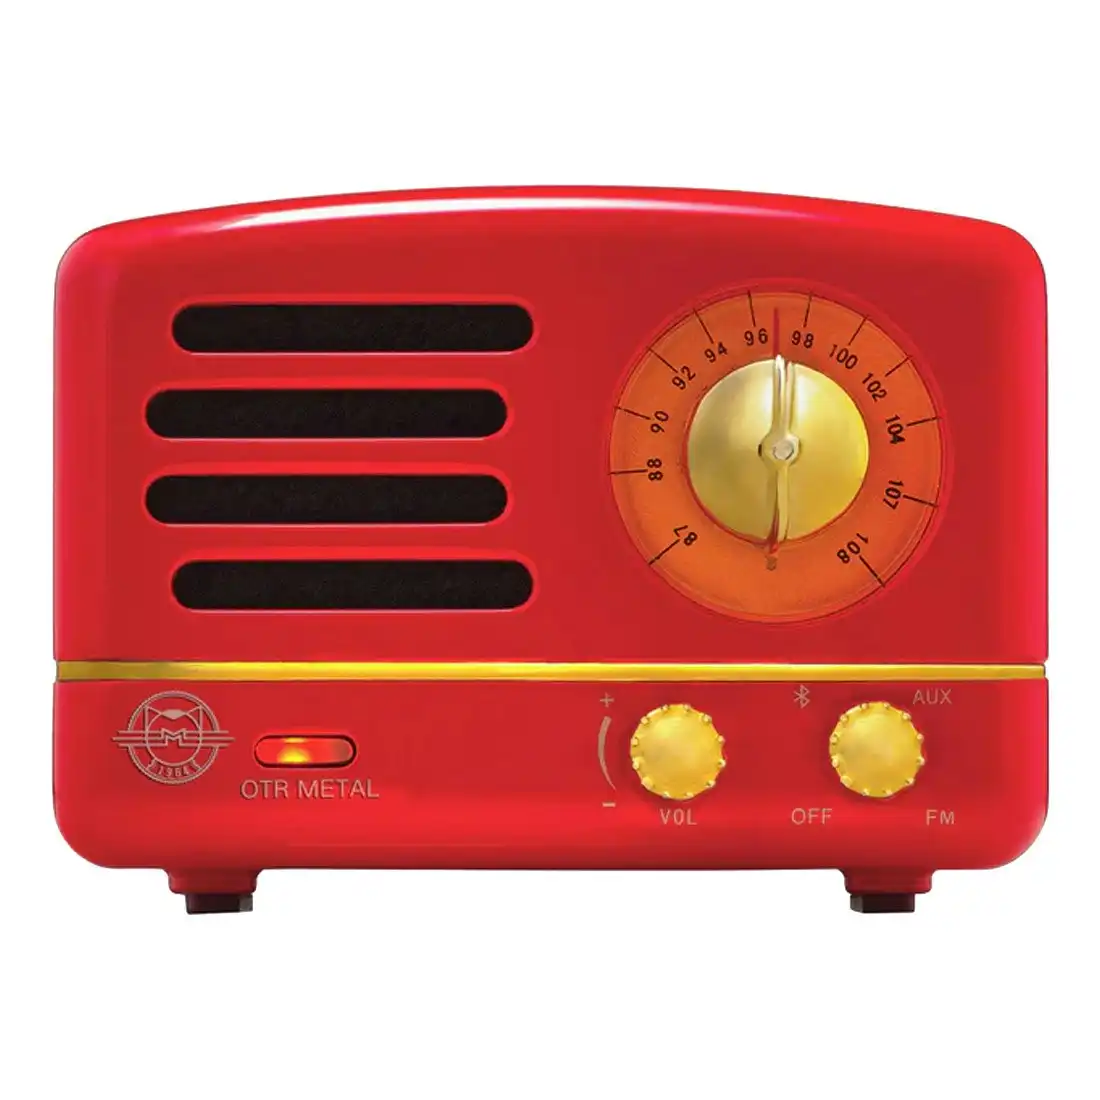 MUZEN OTR Metal Portable FM Radio Bluetooth Speaker - Red